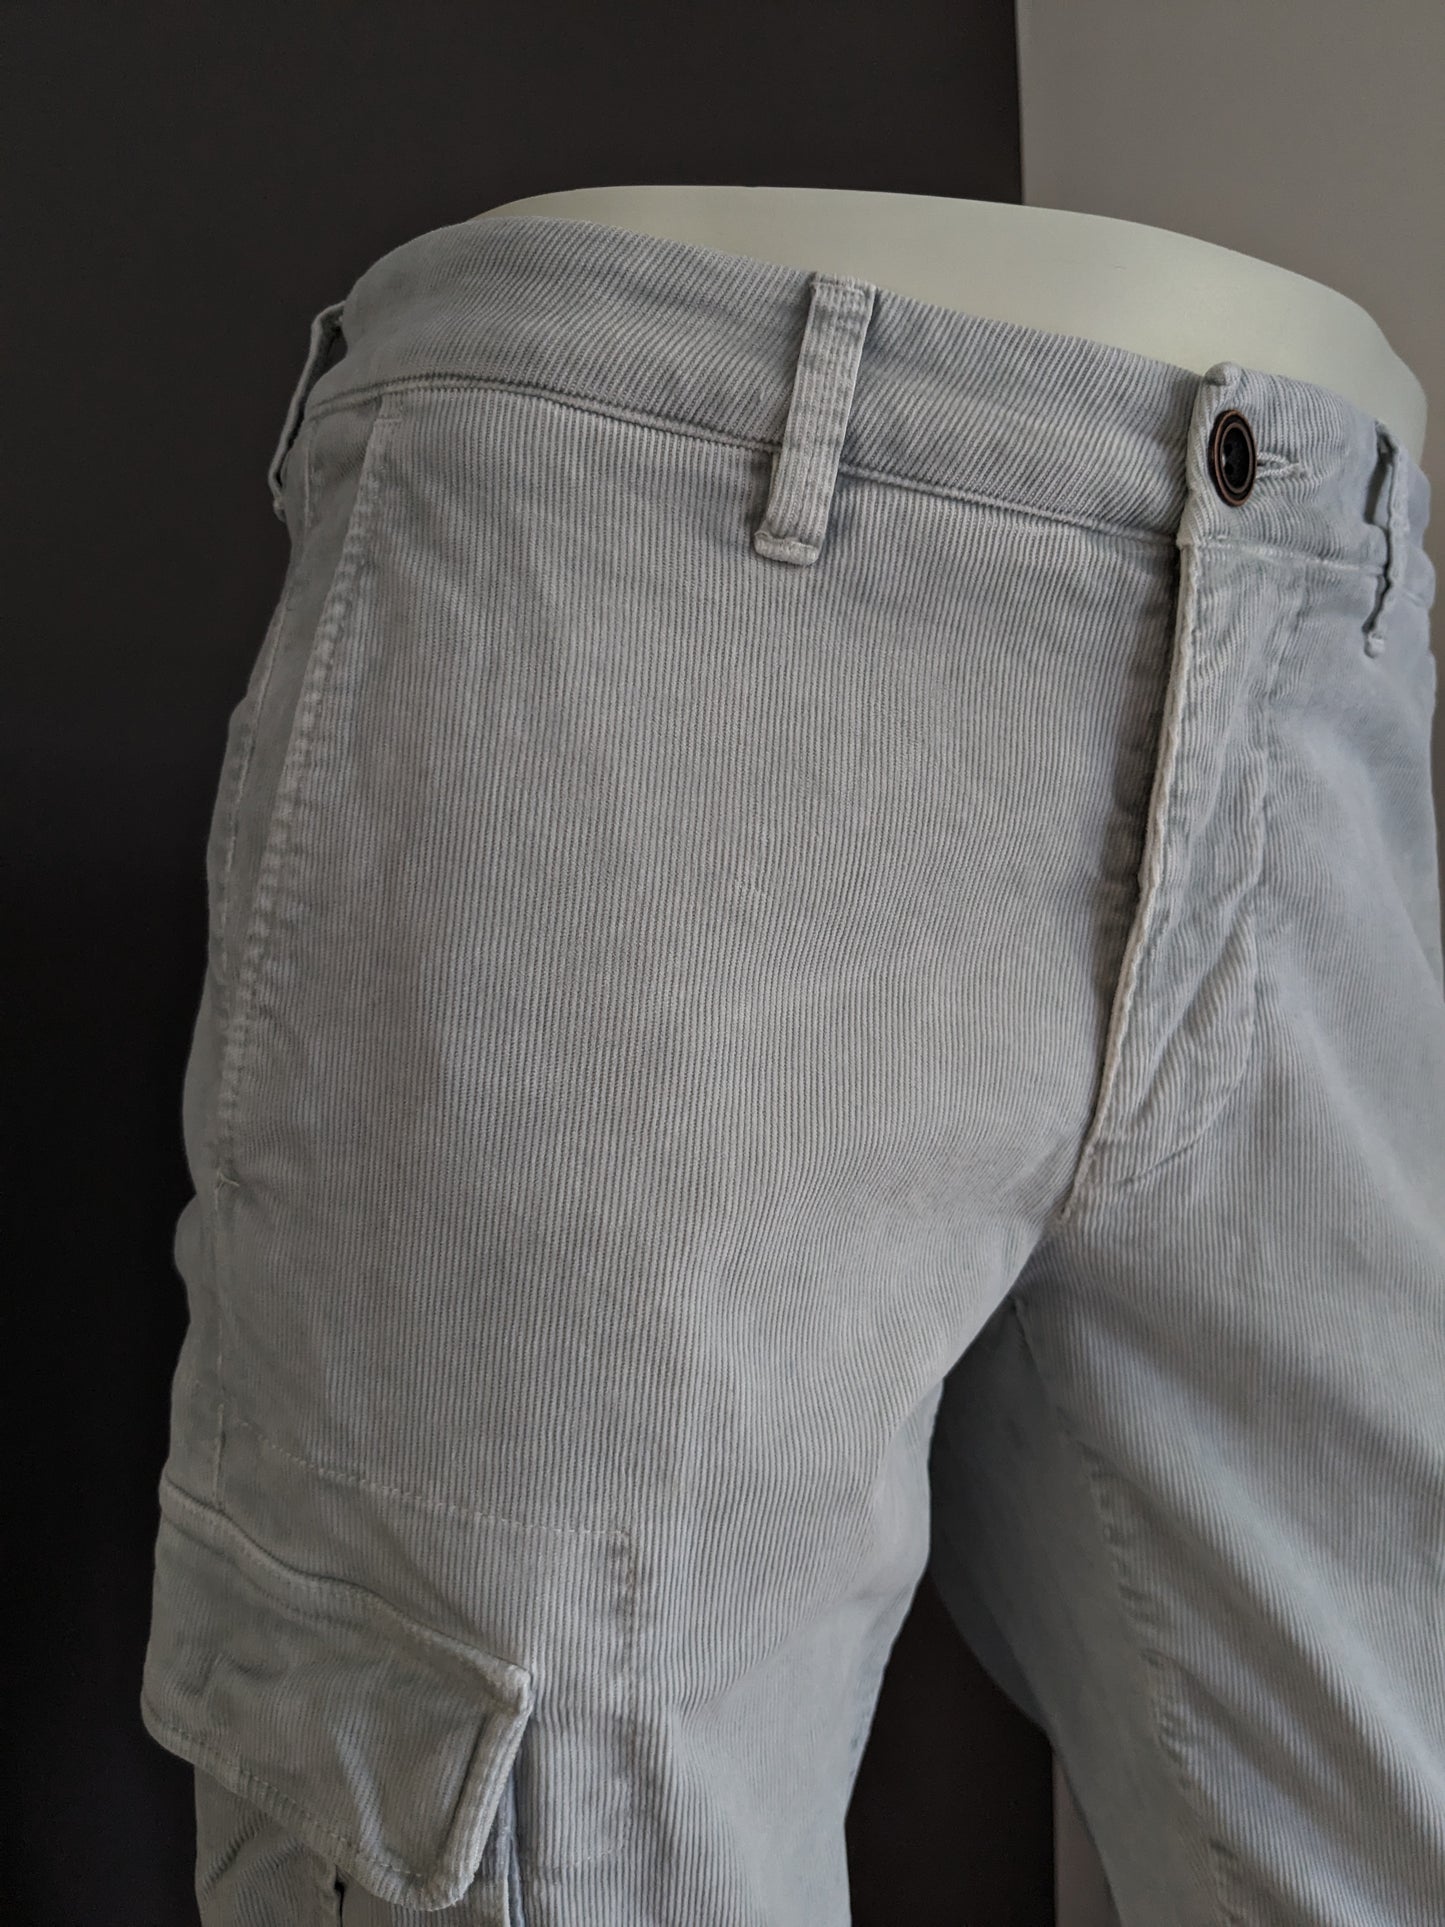 Pantalón cargo Artu Napoli Rib. Color gris claro. Tamaño W31 - L30. Estirar.